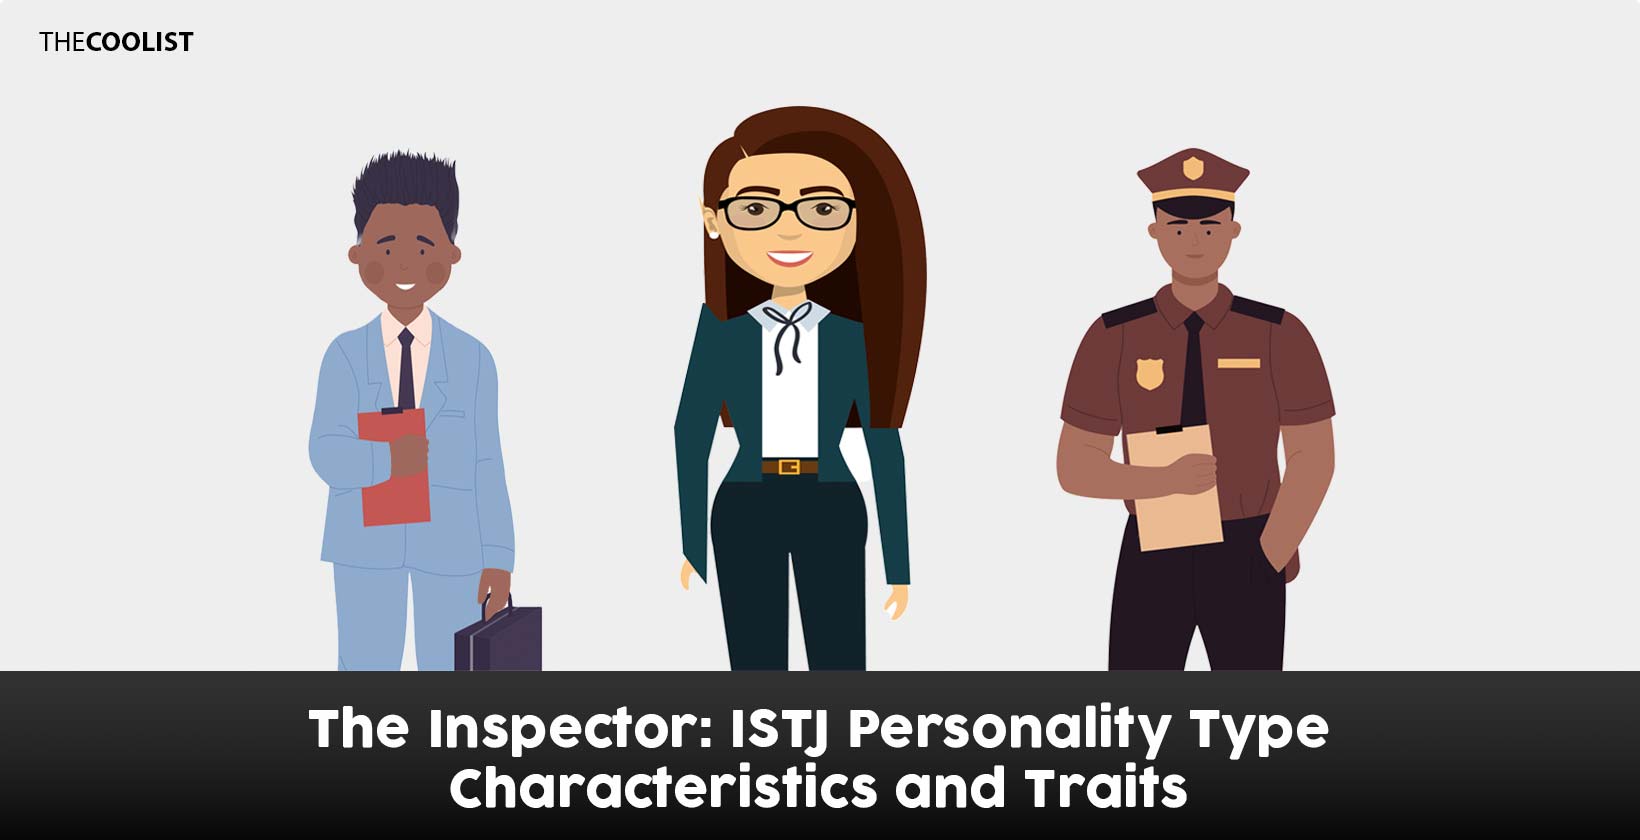 ISTJ personality type